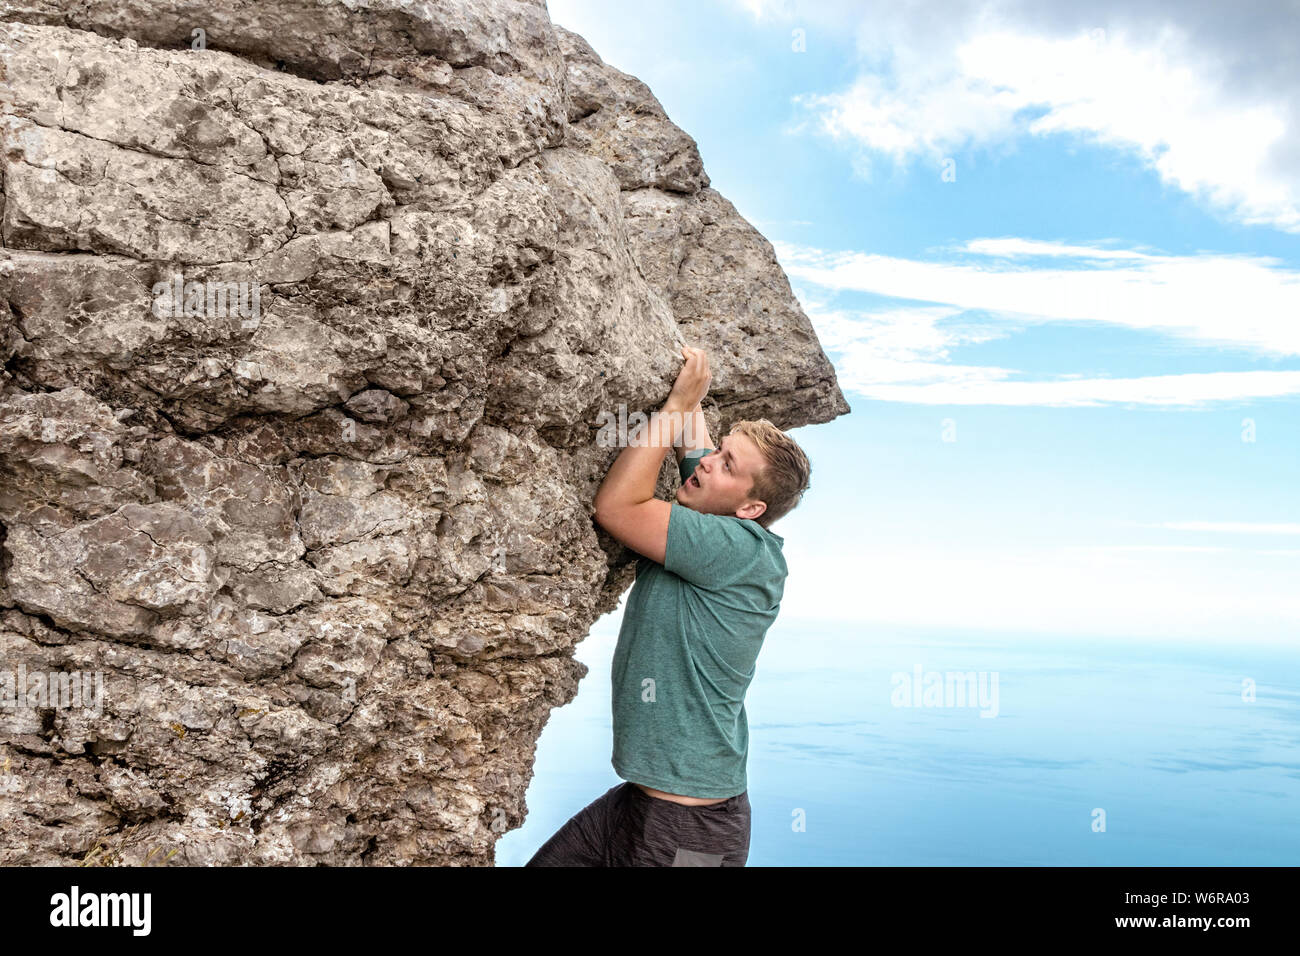 Young man climbing, hanging on edge Stock Photo - Alamy